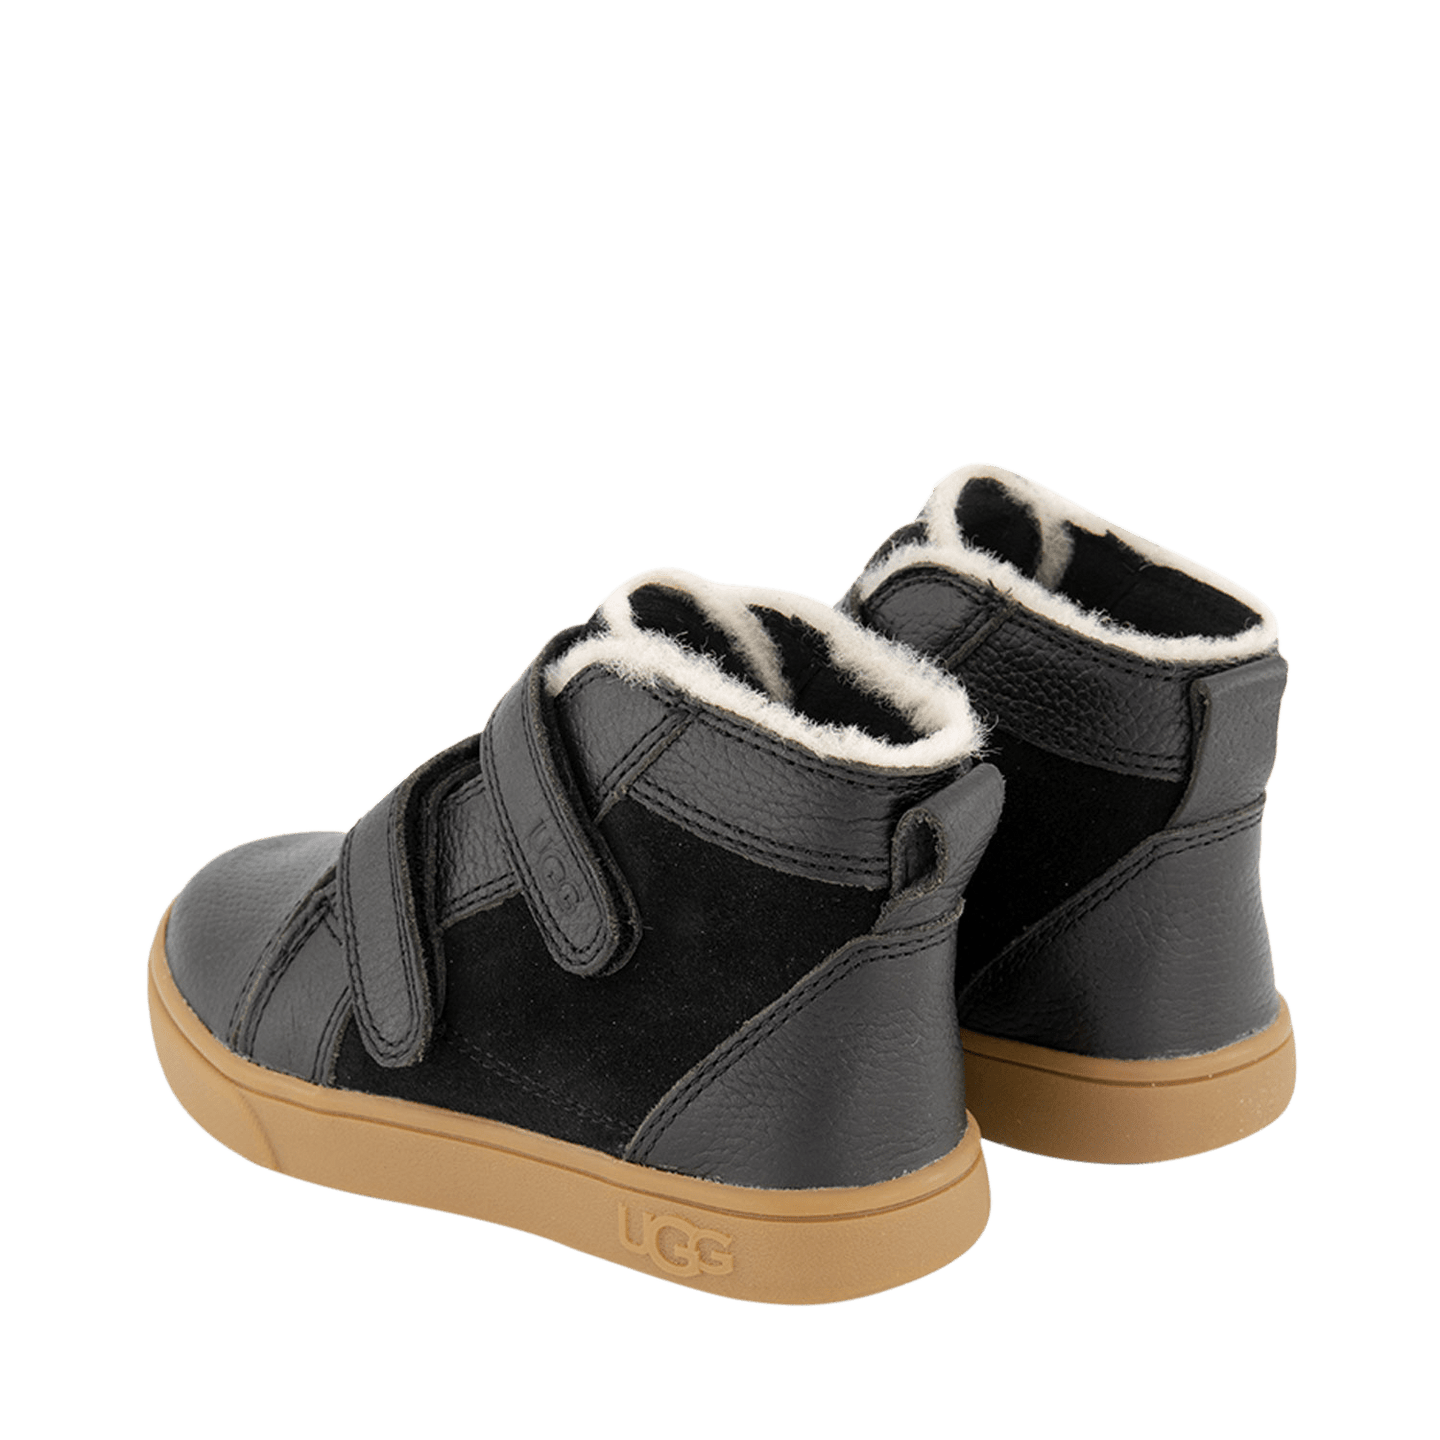 UGG Kinder Unisex Laarzen Zwart 20.5